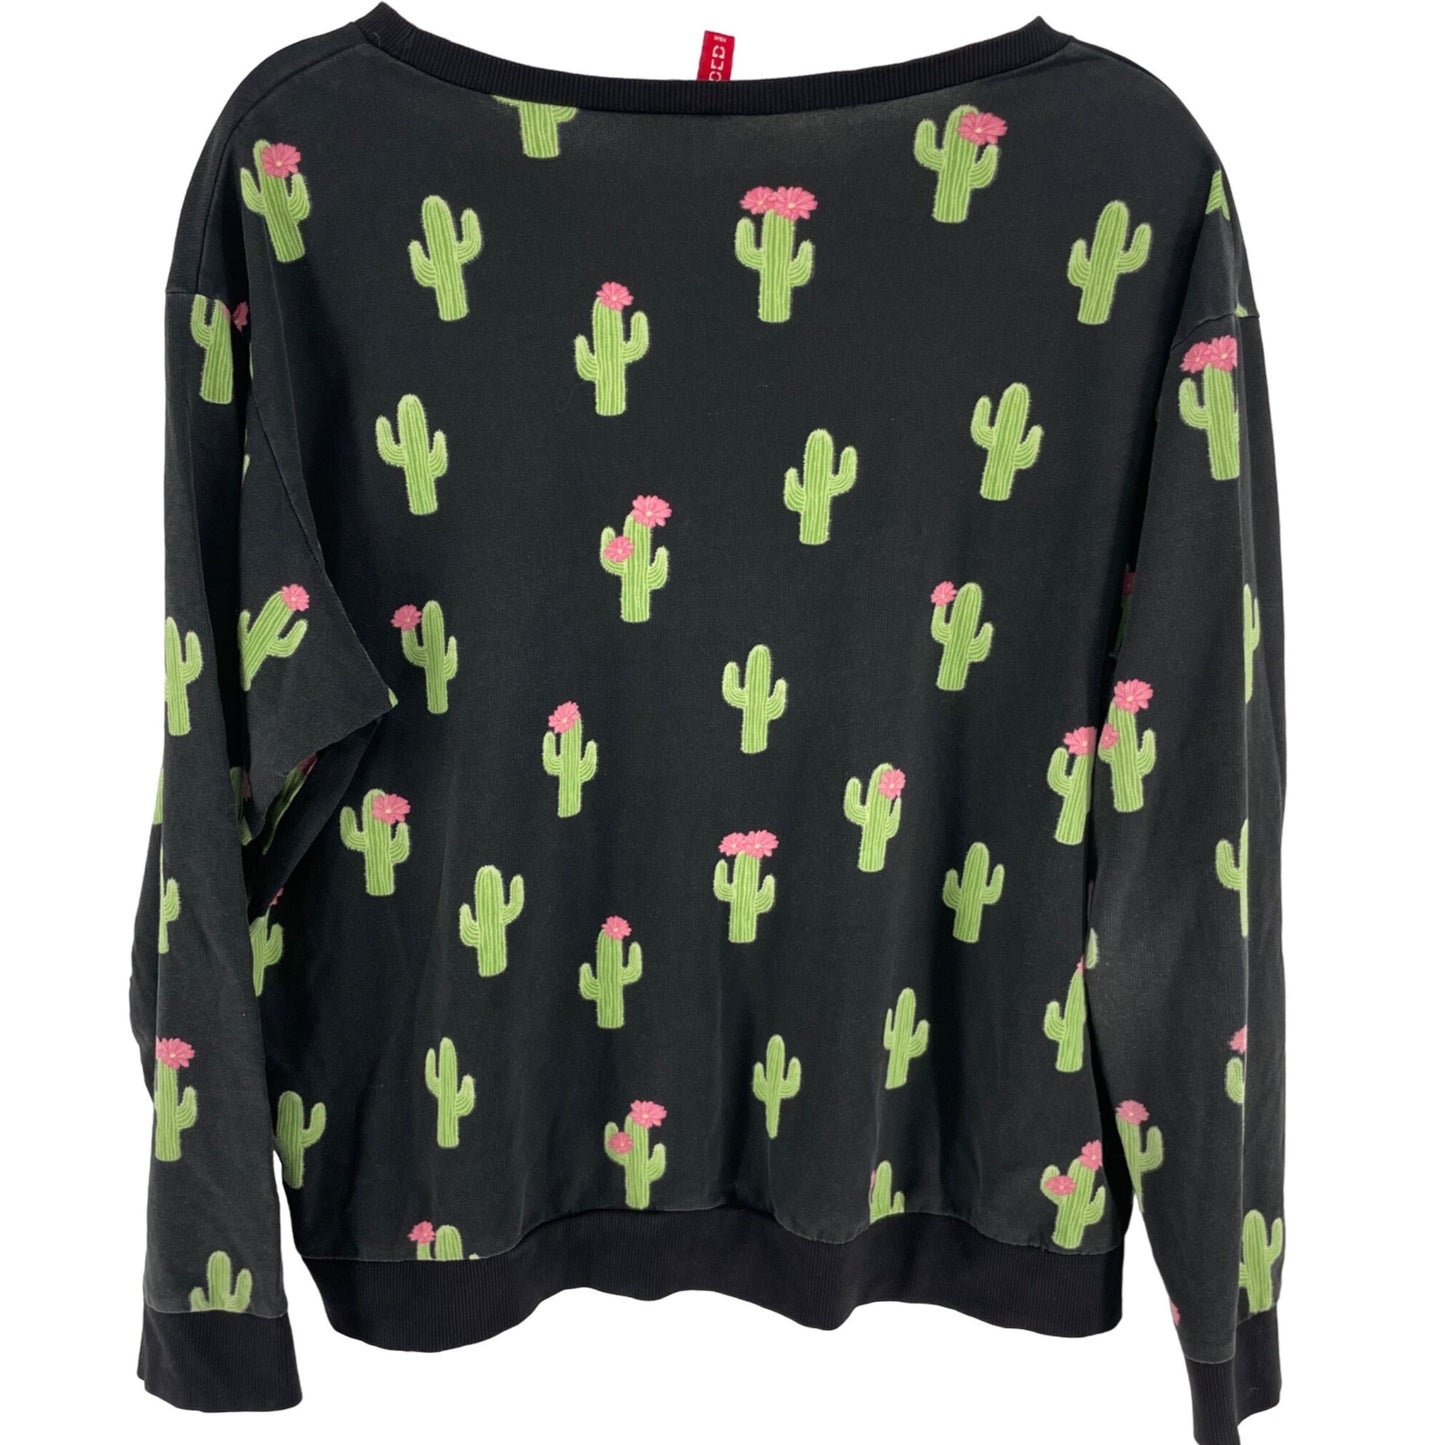 H&M Women's Size Medium Black, Green & Pink Cactus Print Sweatshirt